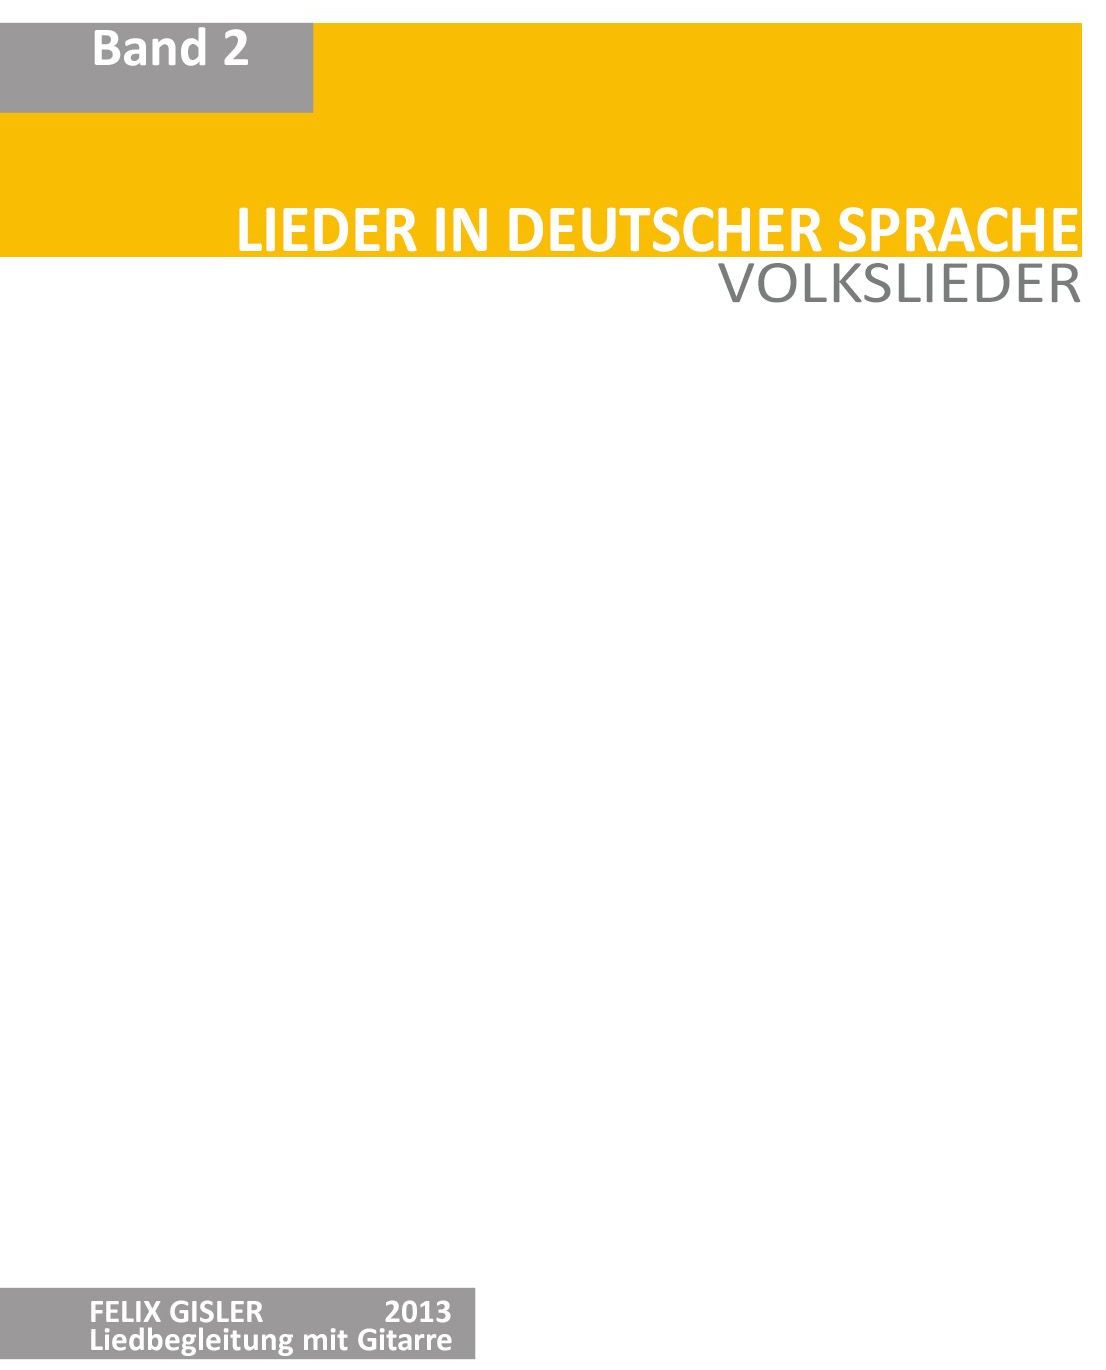 Band 2  Volkslieder in deutscher Sprache Felix Gisler